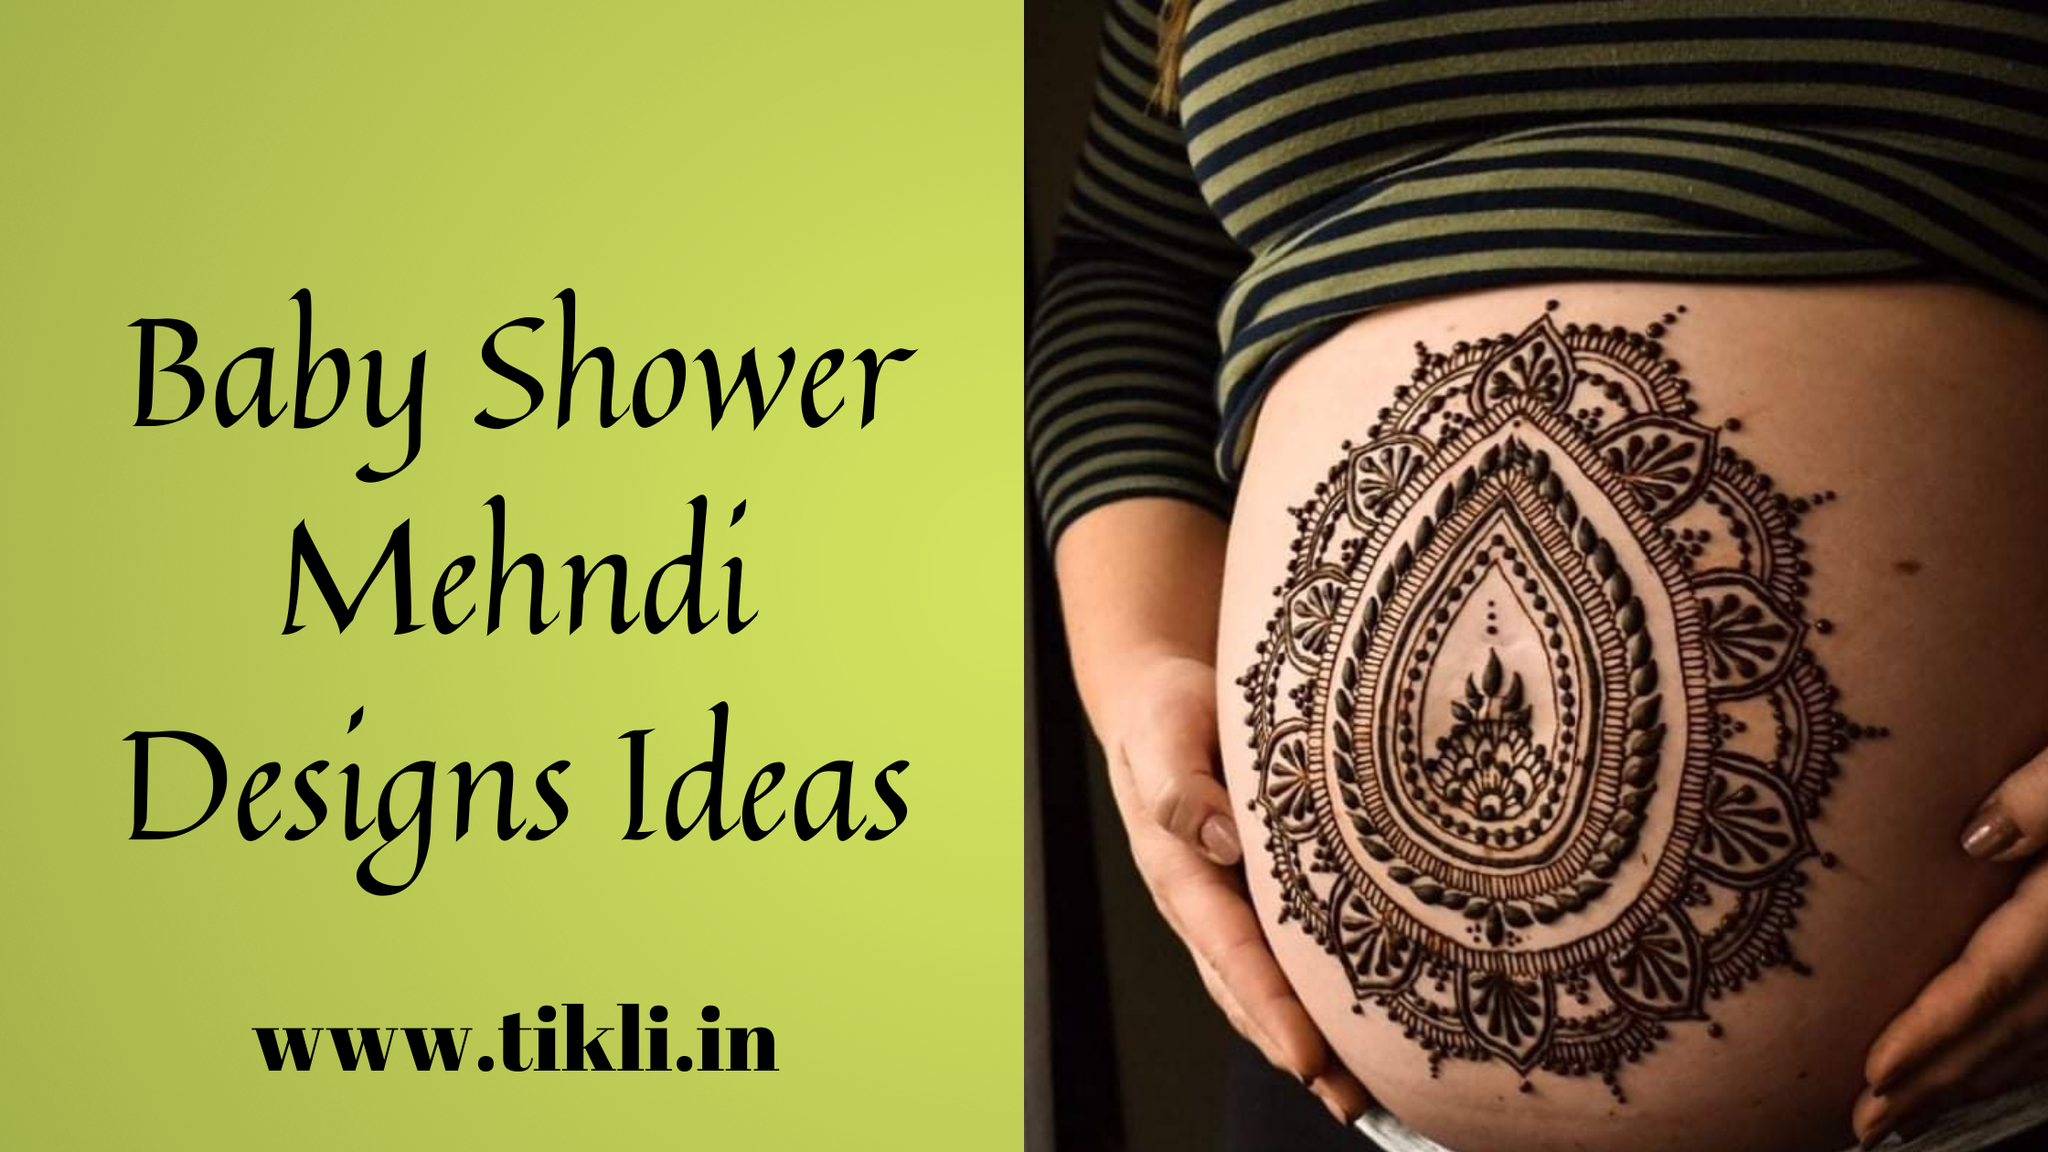 Mehndi Designs - Baby Shower Mehndi Designs for Hand ❤... | Facebook